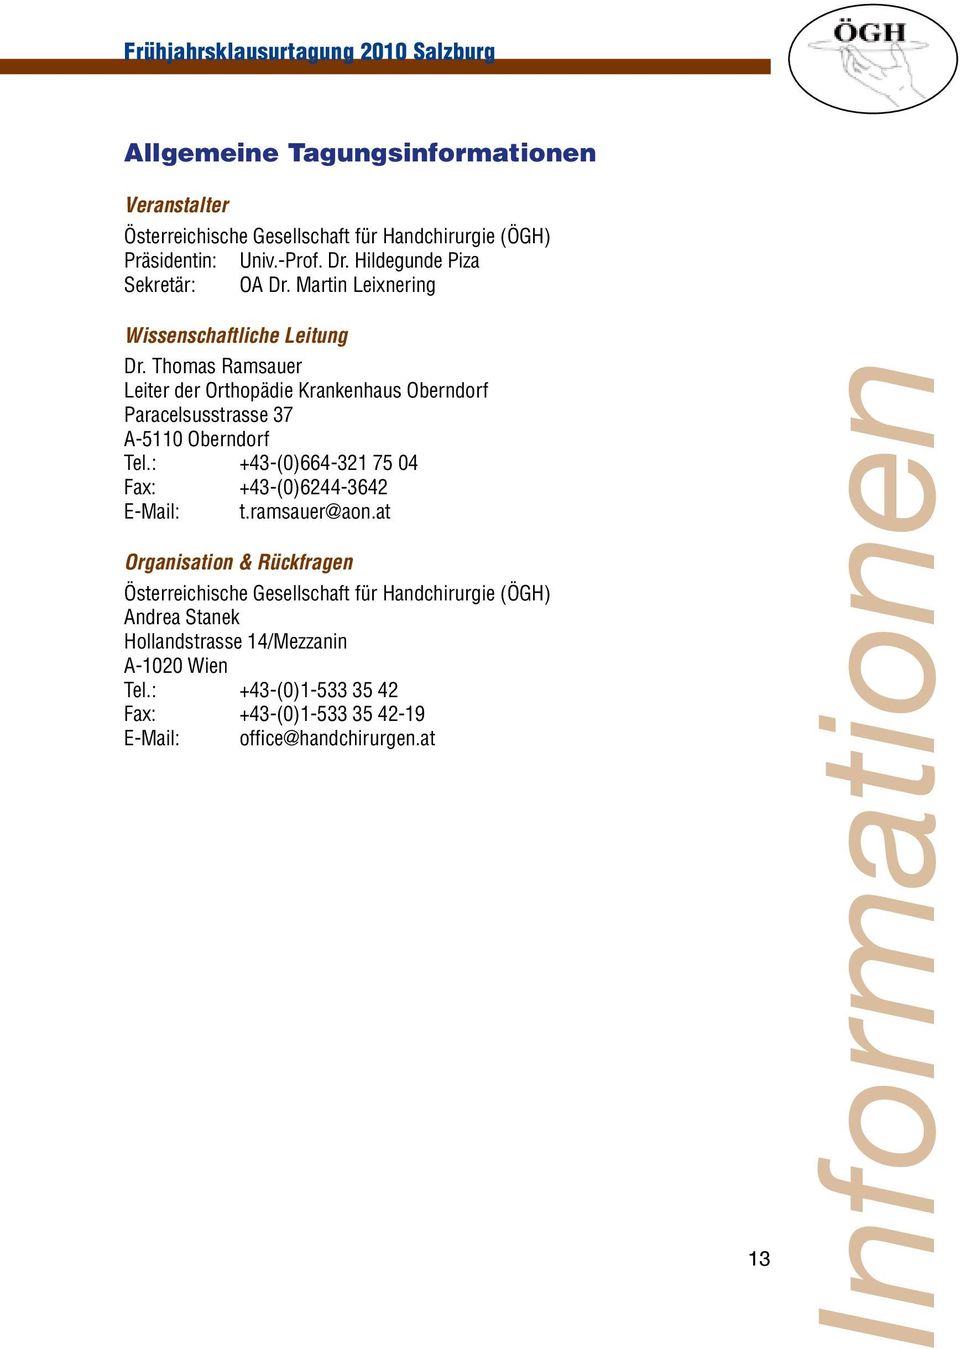 Thomas Ramsauer Leiter der Orthopädie Krankenhaus Oberndorf Paracelsusstrasse 37 A-5110 Oberndorf Tel.: +43-(0)664-321 75 04 Fax: +43-(0)6244-3642 E-Mail: t.